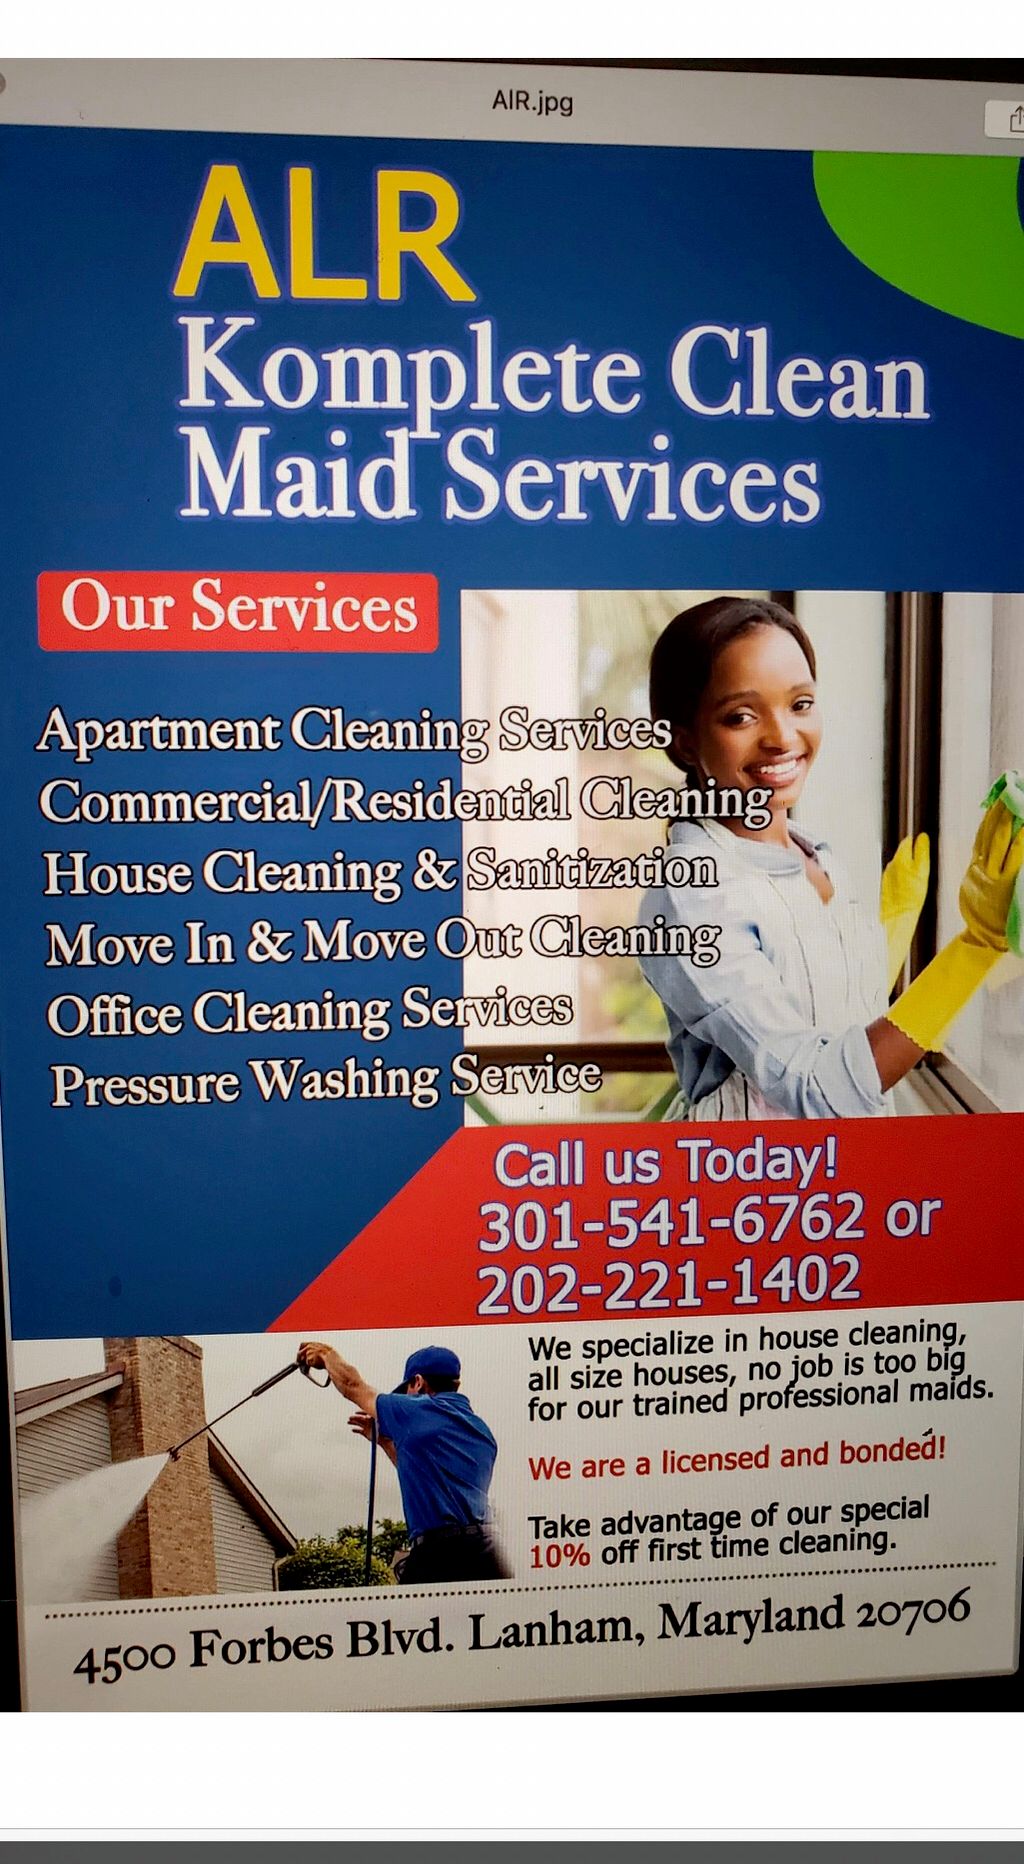 ALR Komplete clean maid service